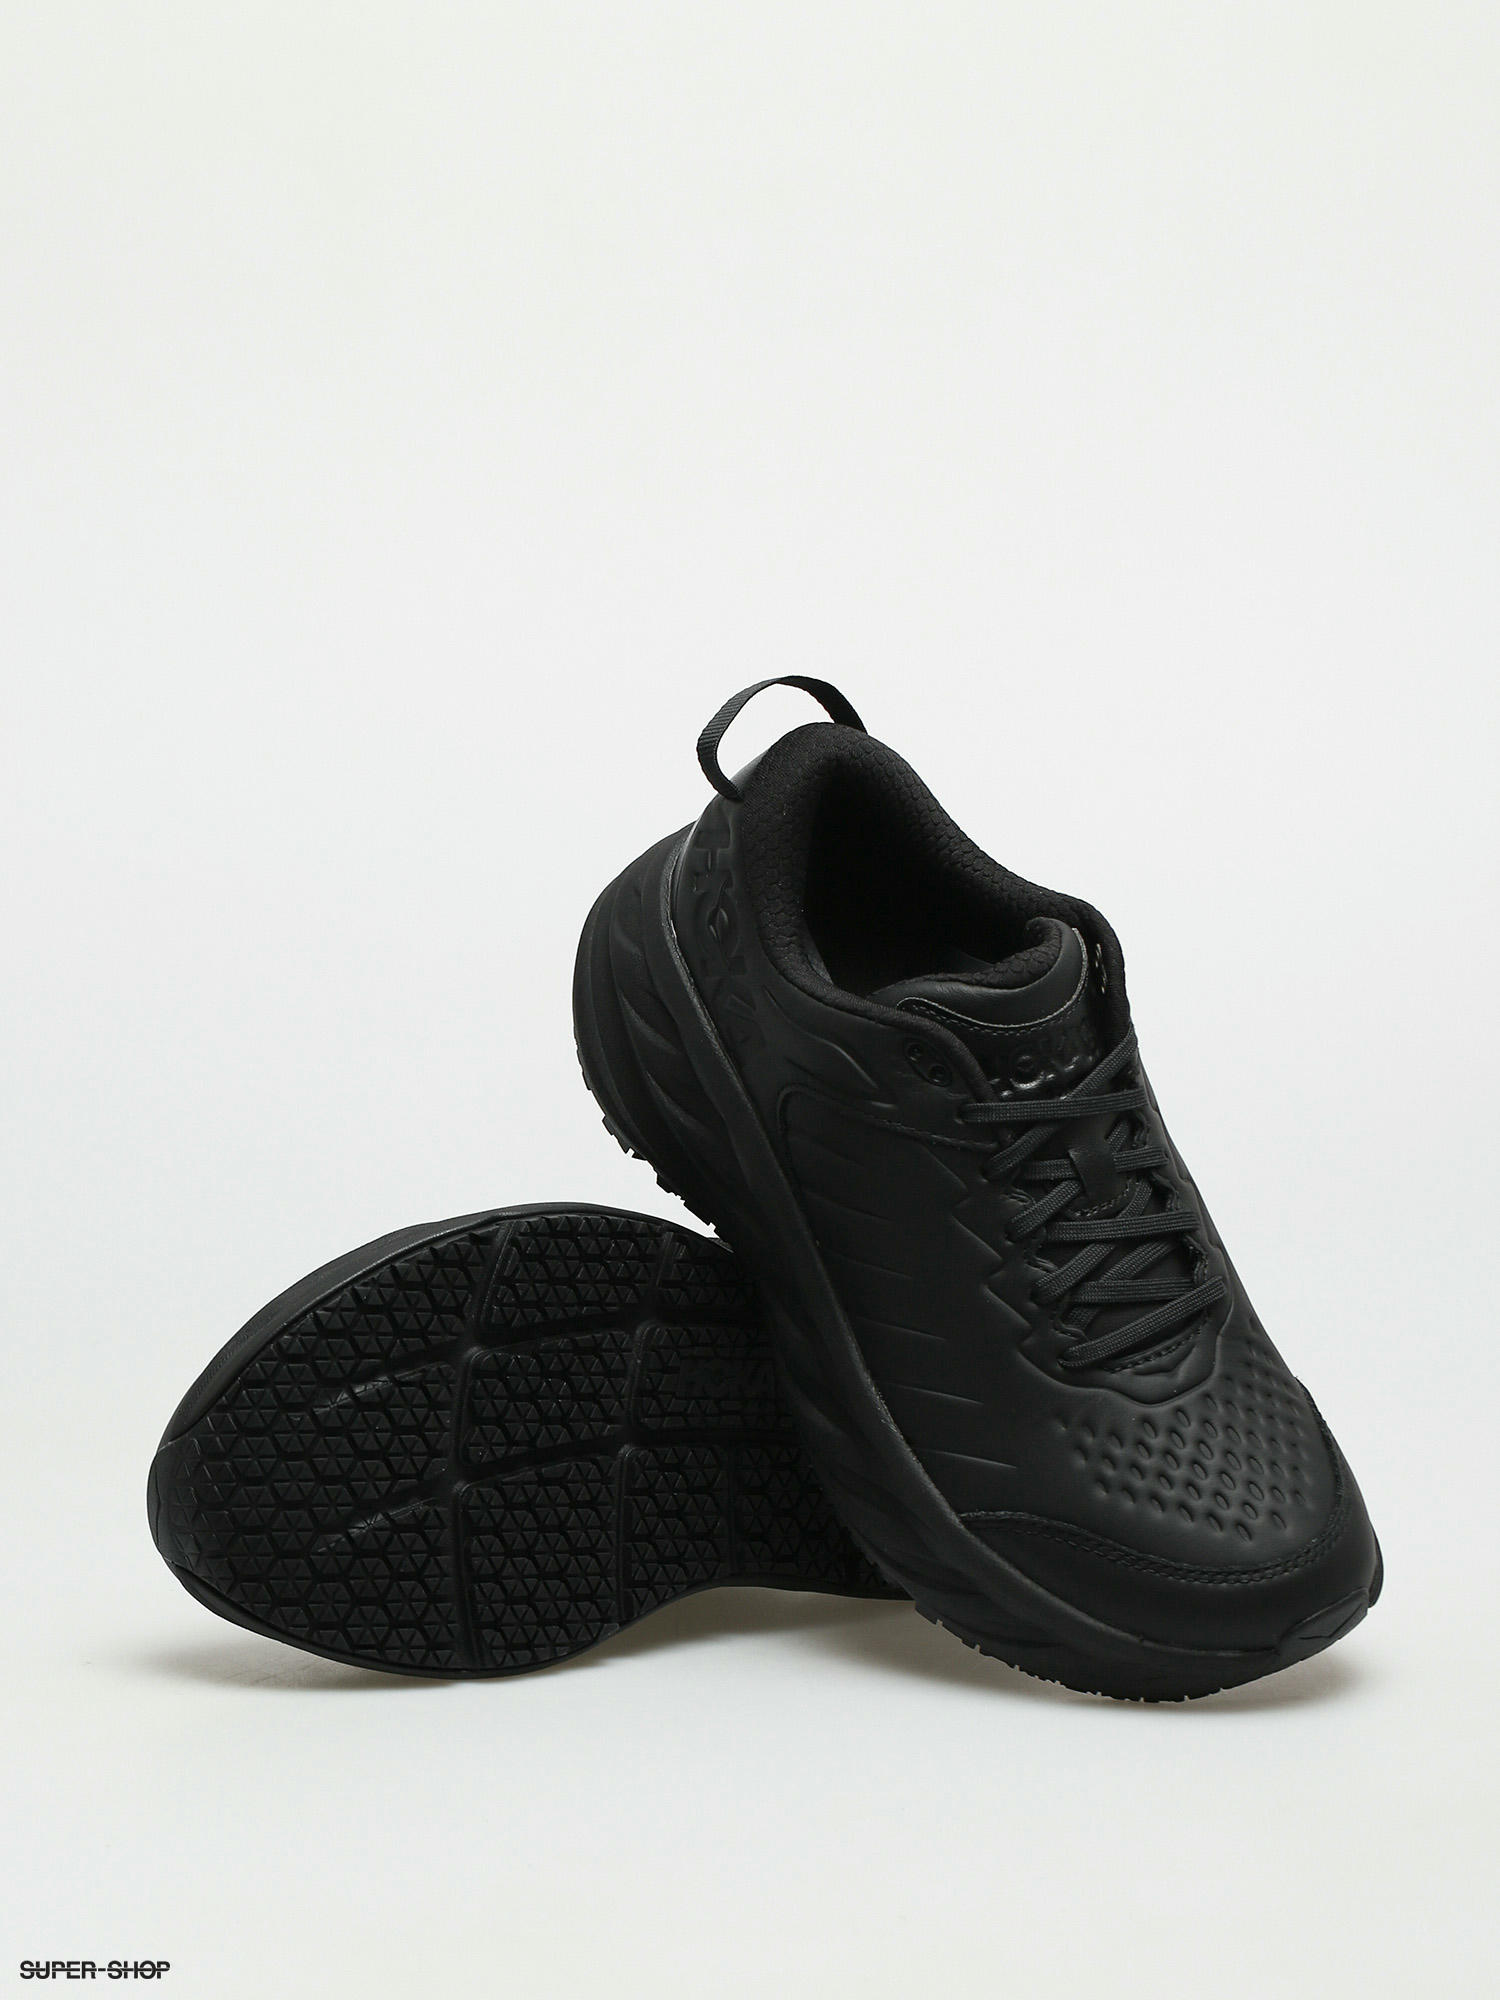 Hoka One One Bondi SR Shoes (black/black)